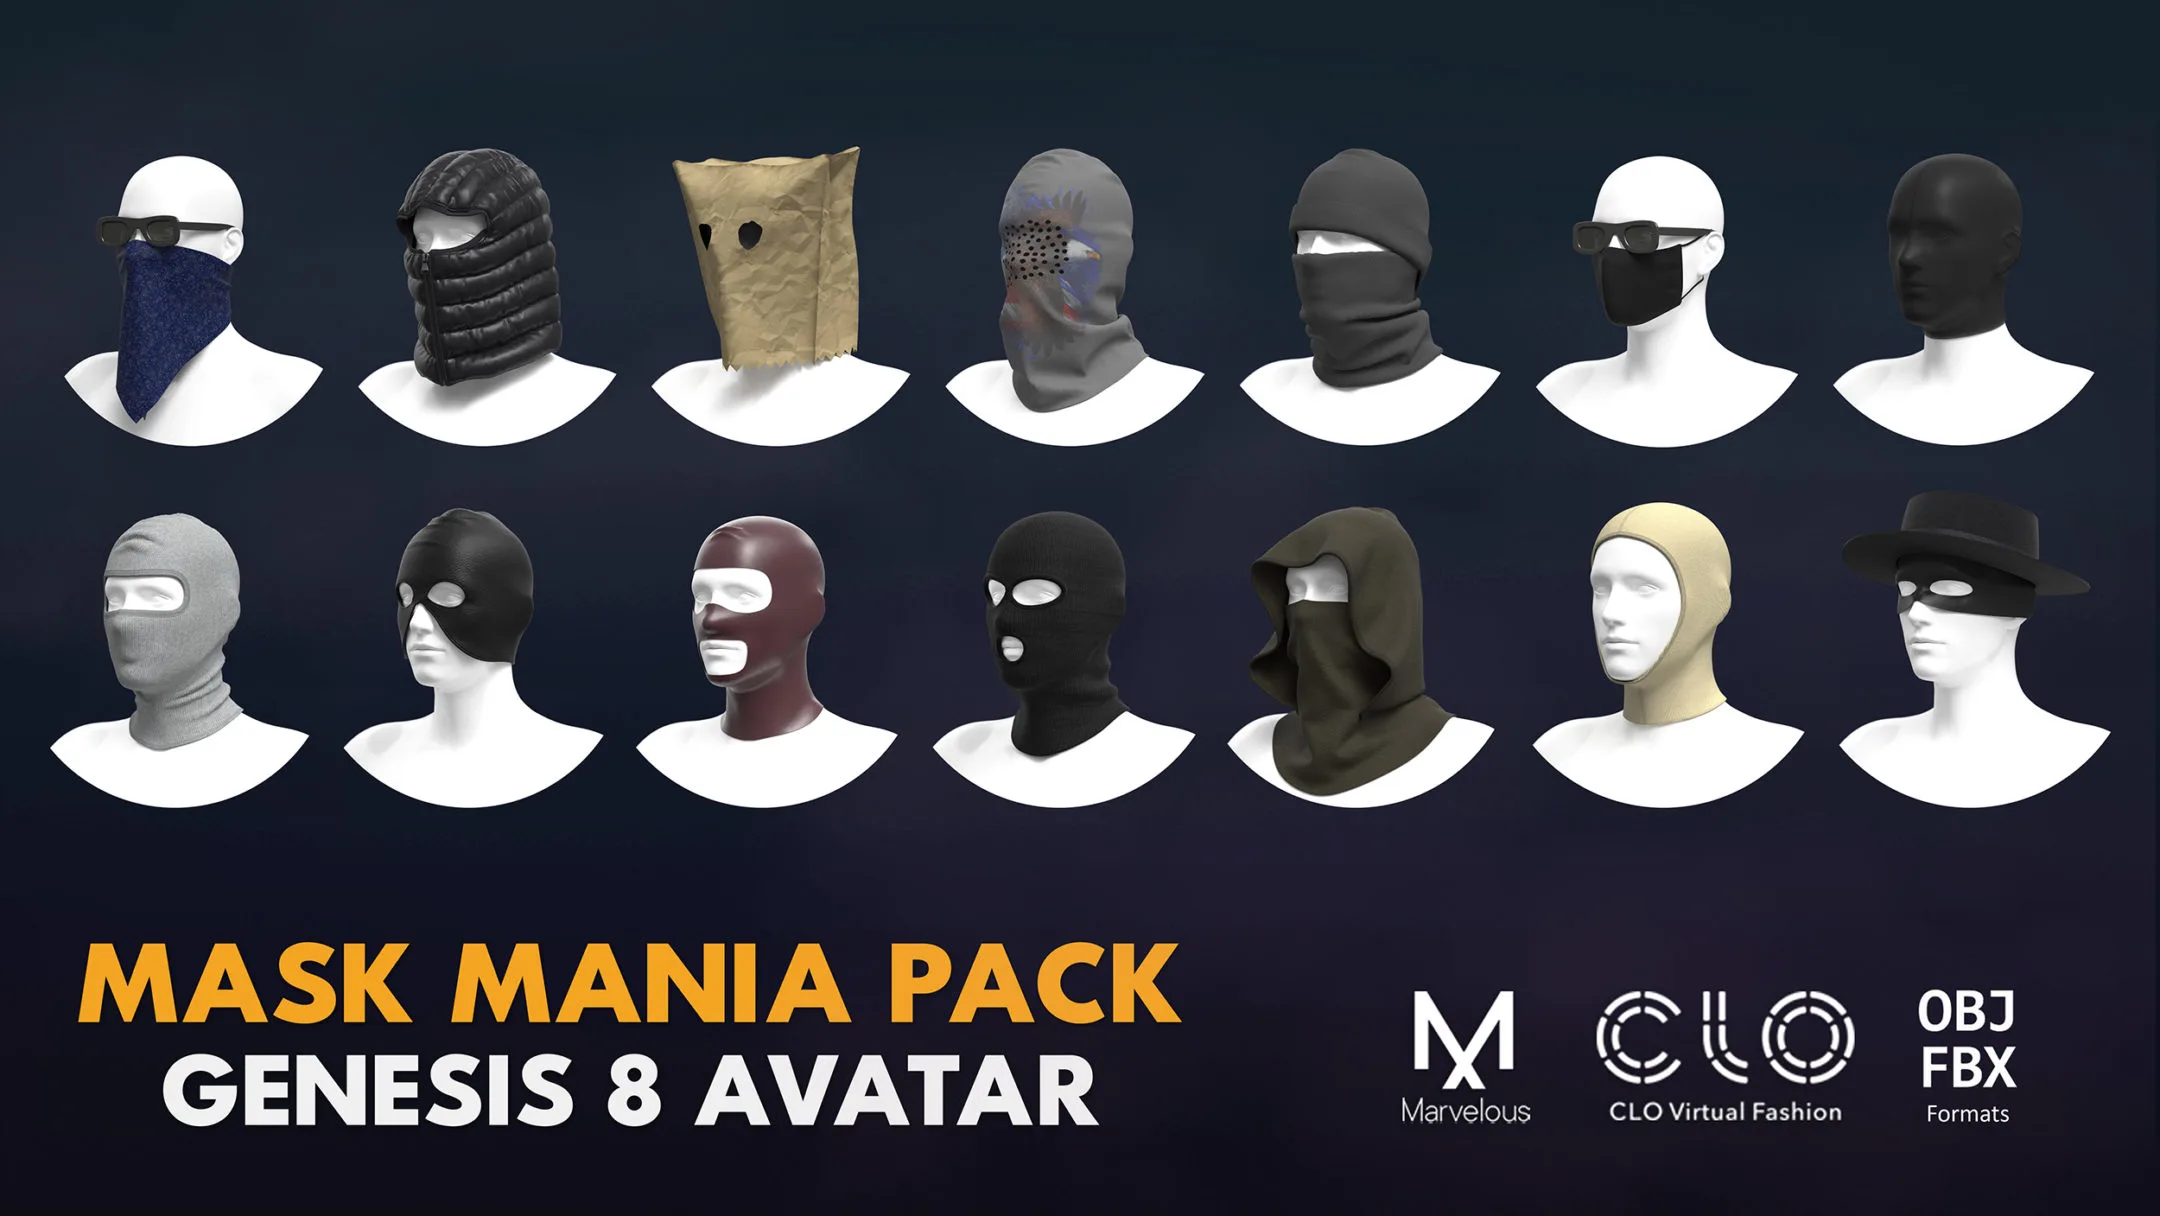 Mask mania pack. Marvelous / Clo 3D / Gen. 8 / zprj obj fbx